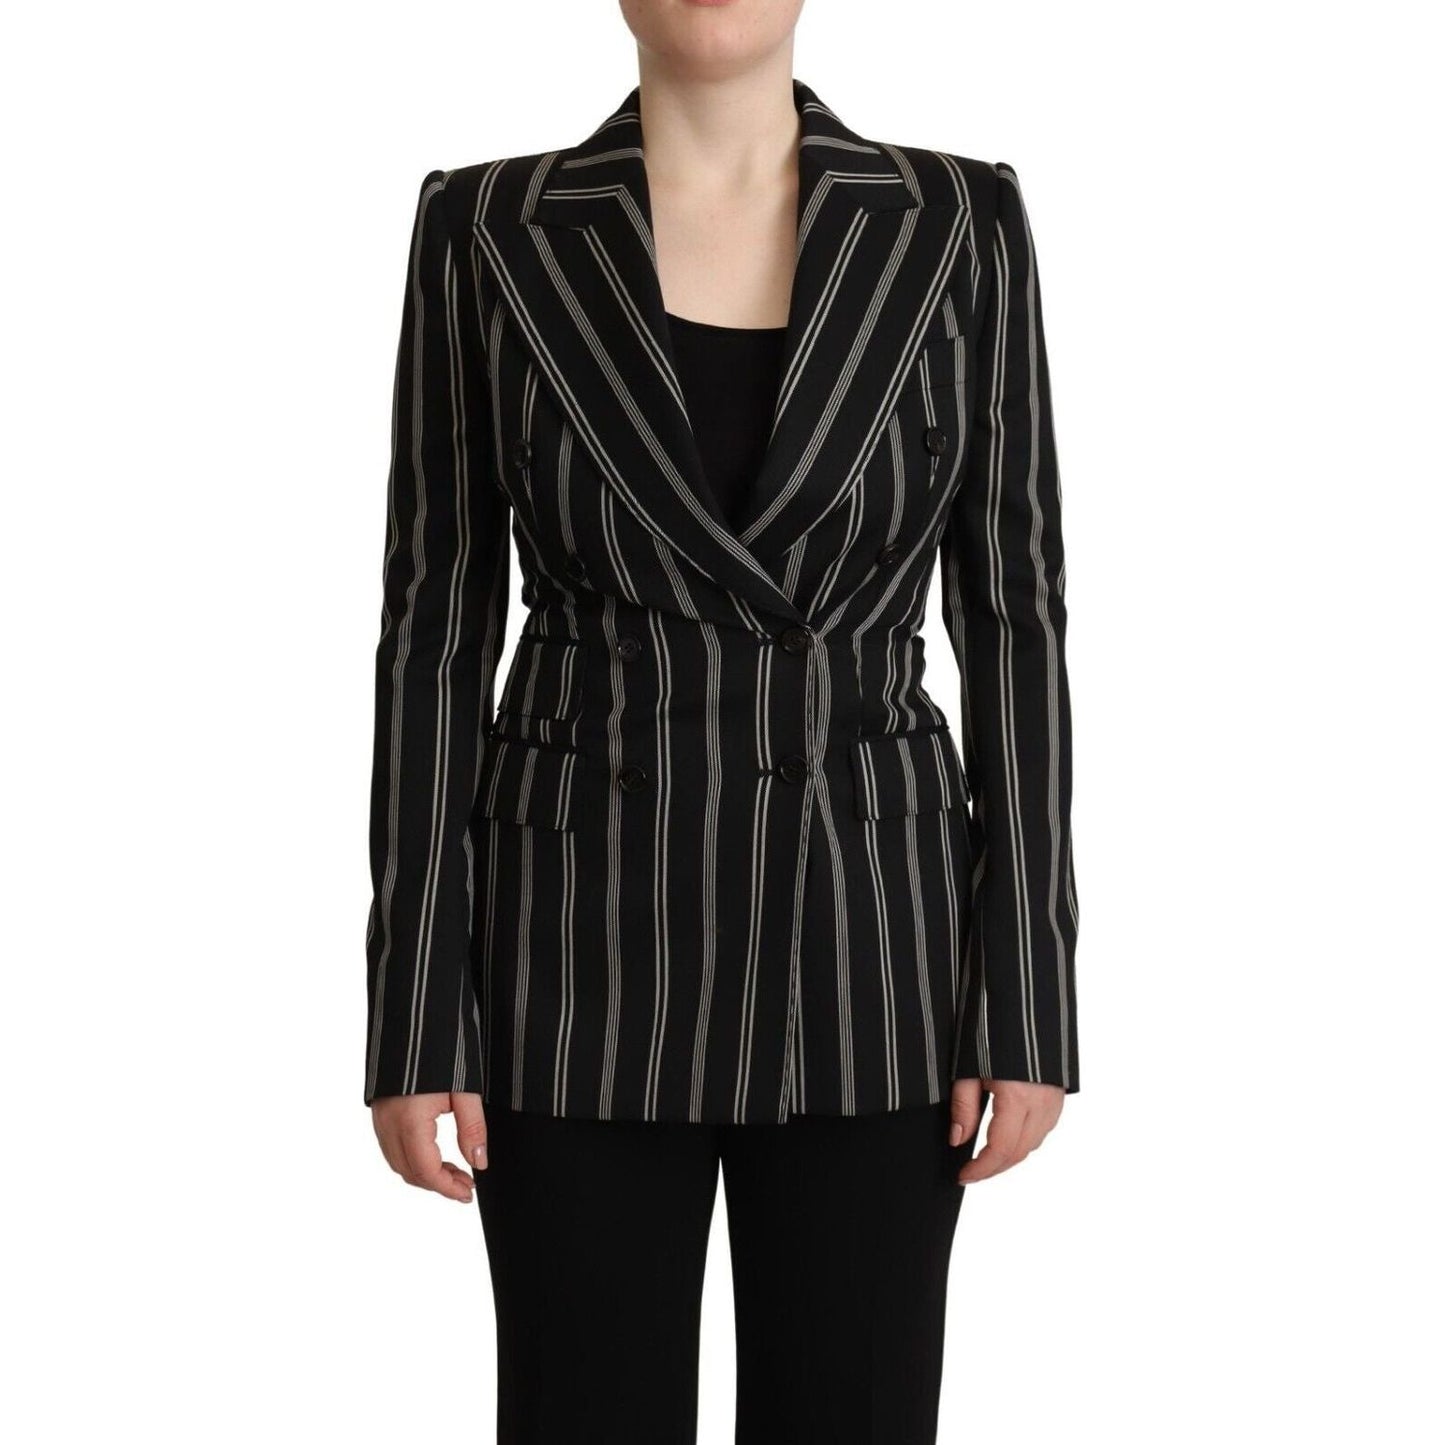 Dolce & Gabbana Elegant Striped Wool Stretch Jacket black-white-stripes-wool-long-sleeves-jacket